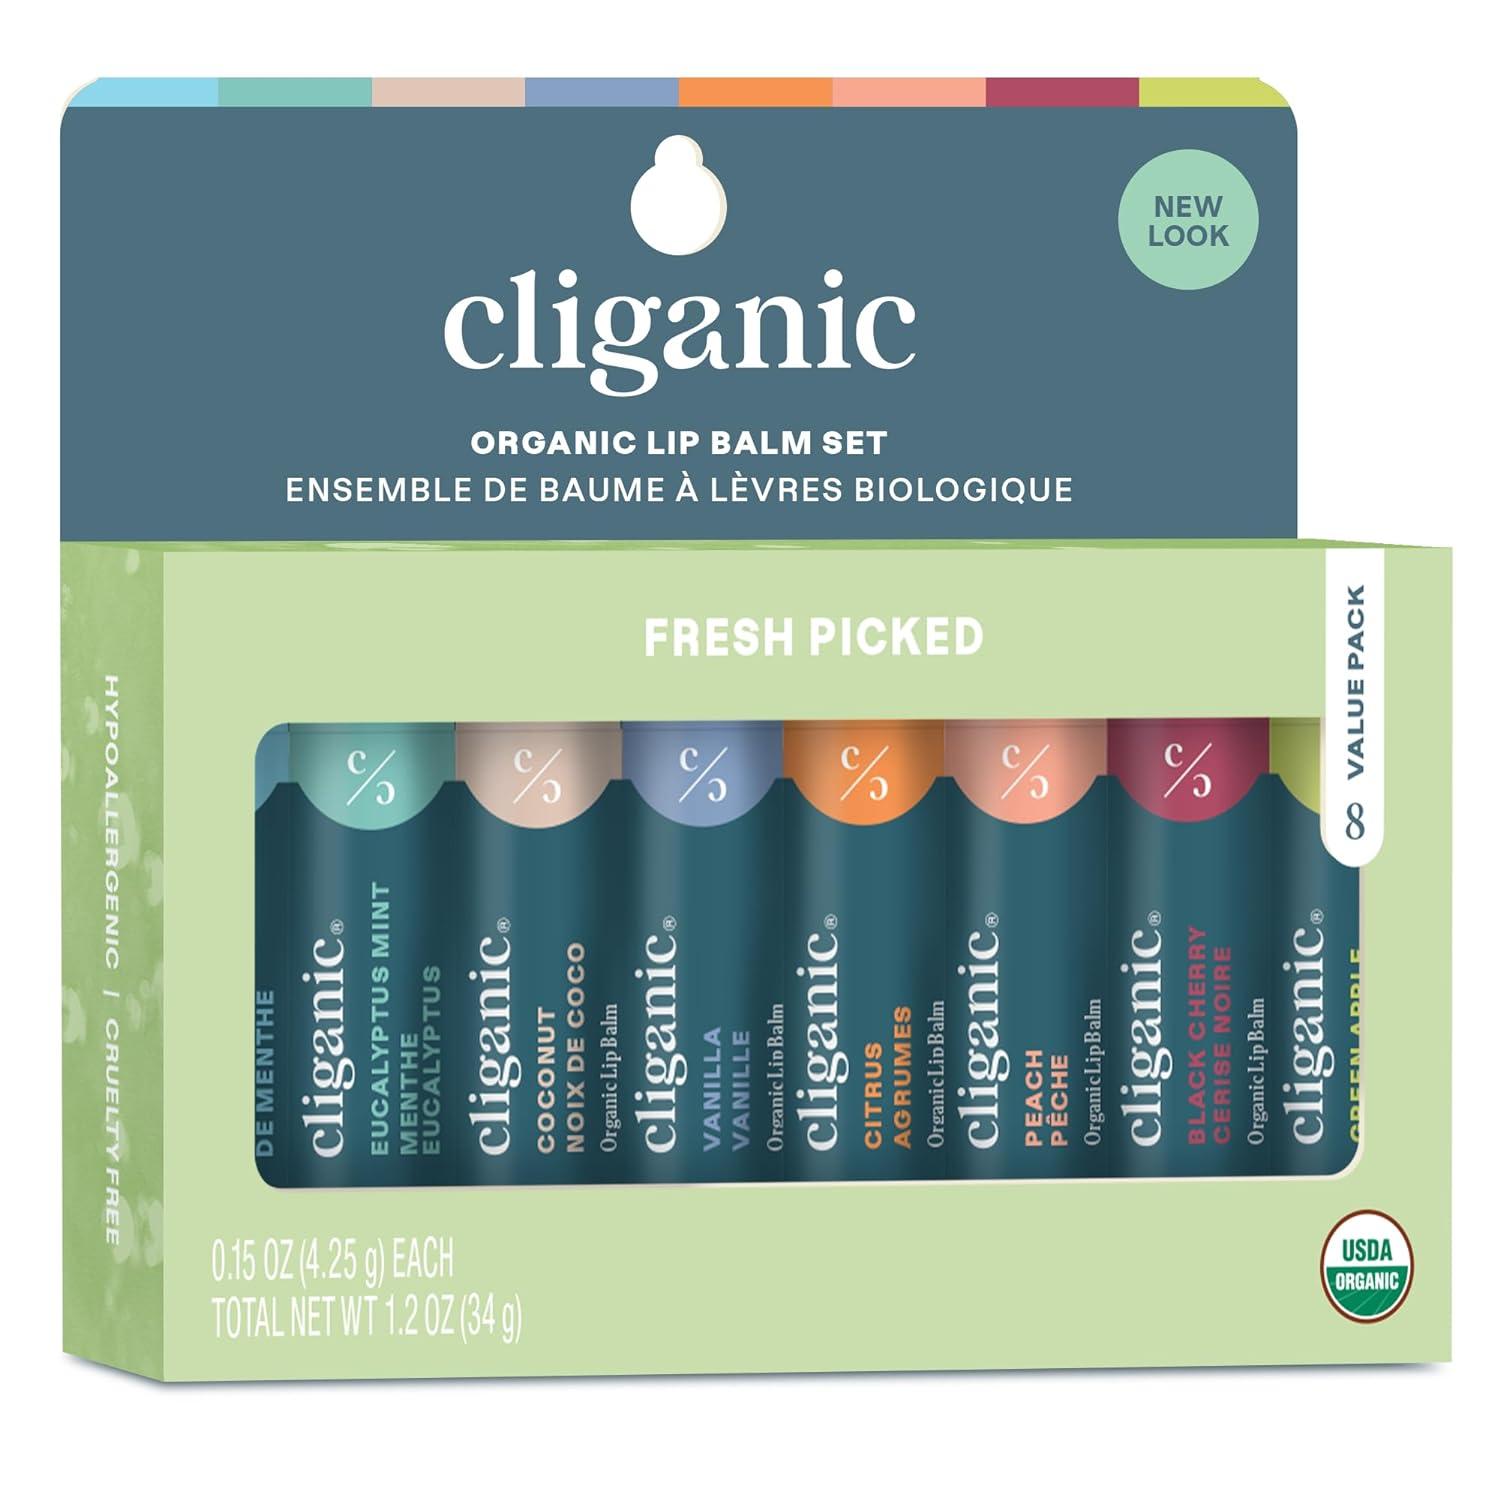 Cliganic Organic Lip Balm 8 Pack for $6.99